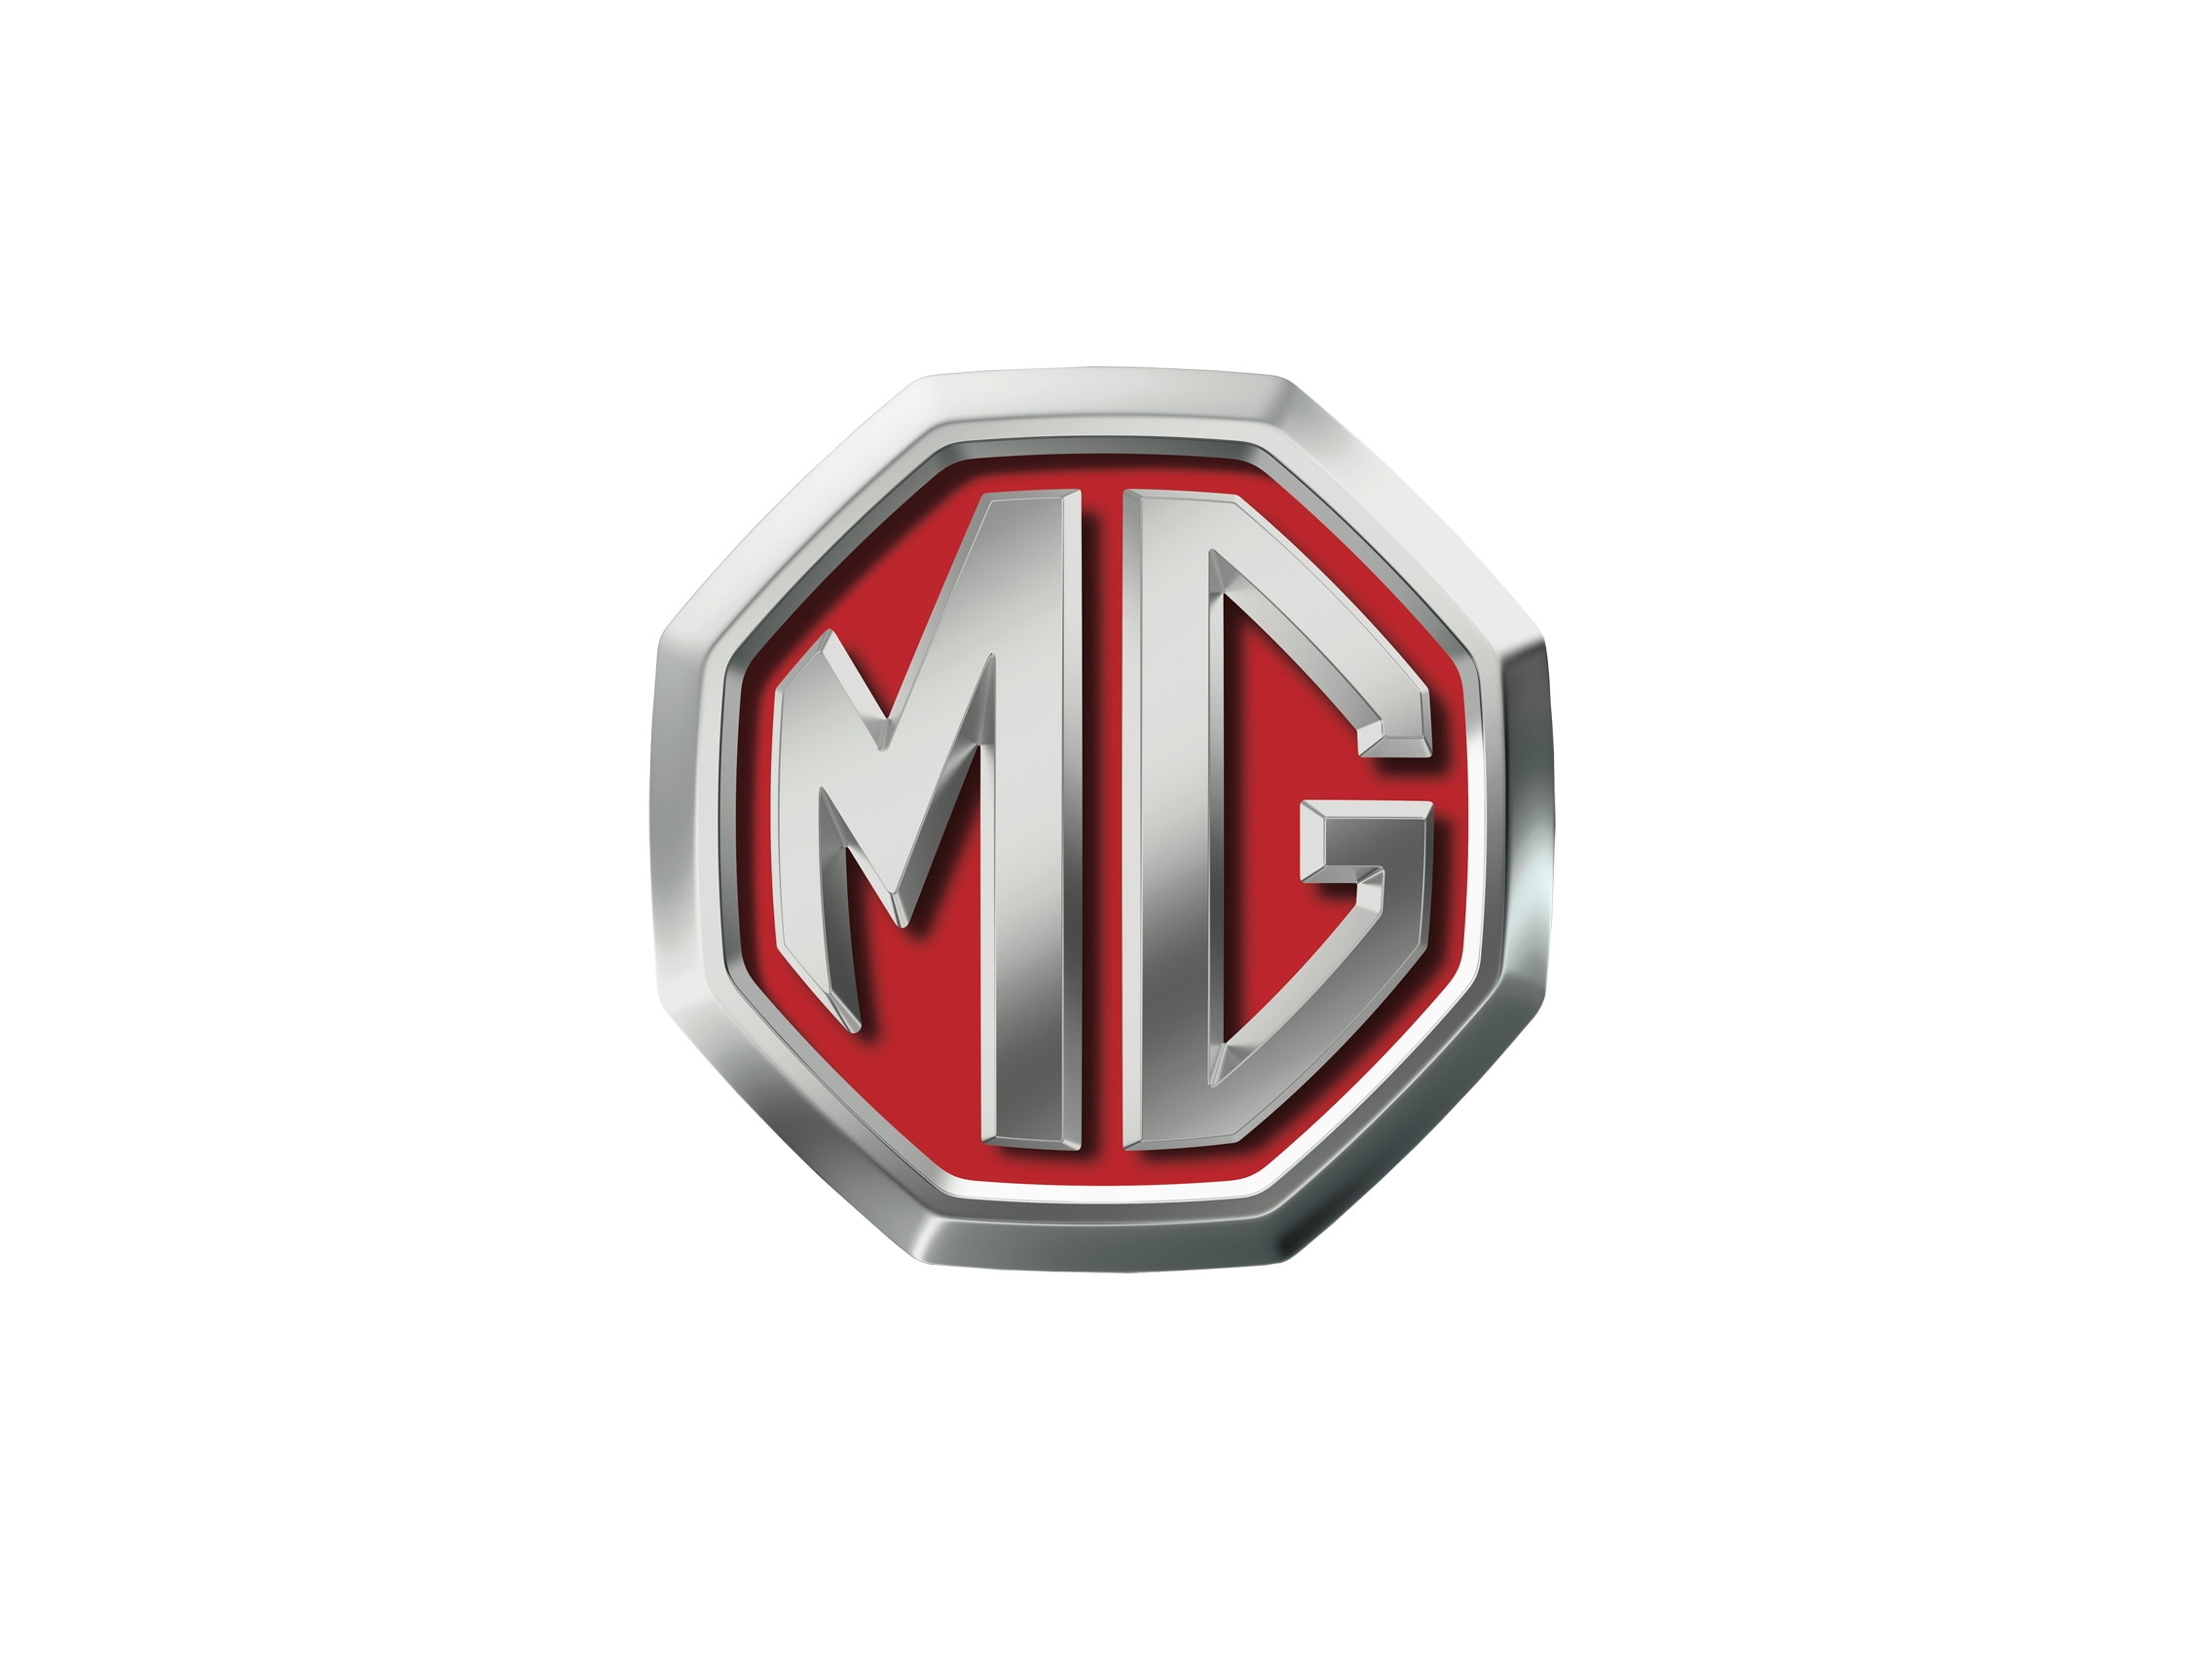 MG luxury car logo png #1139